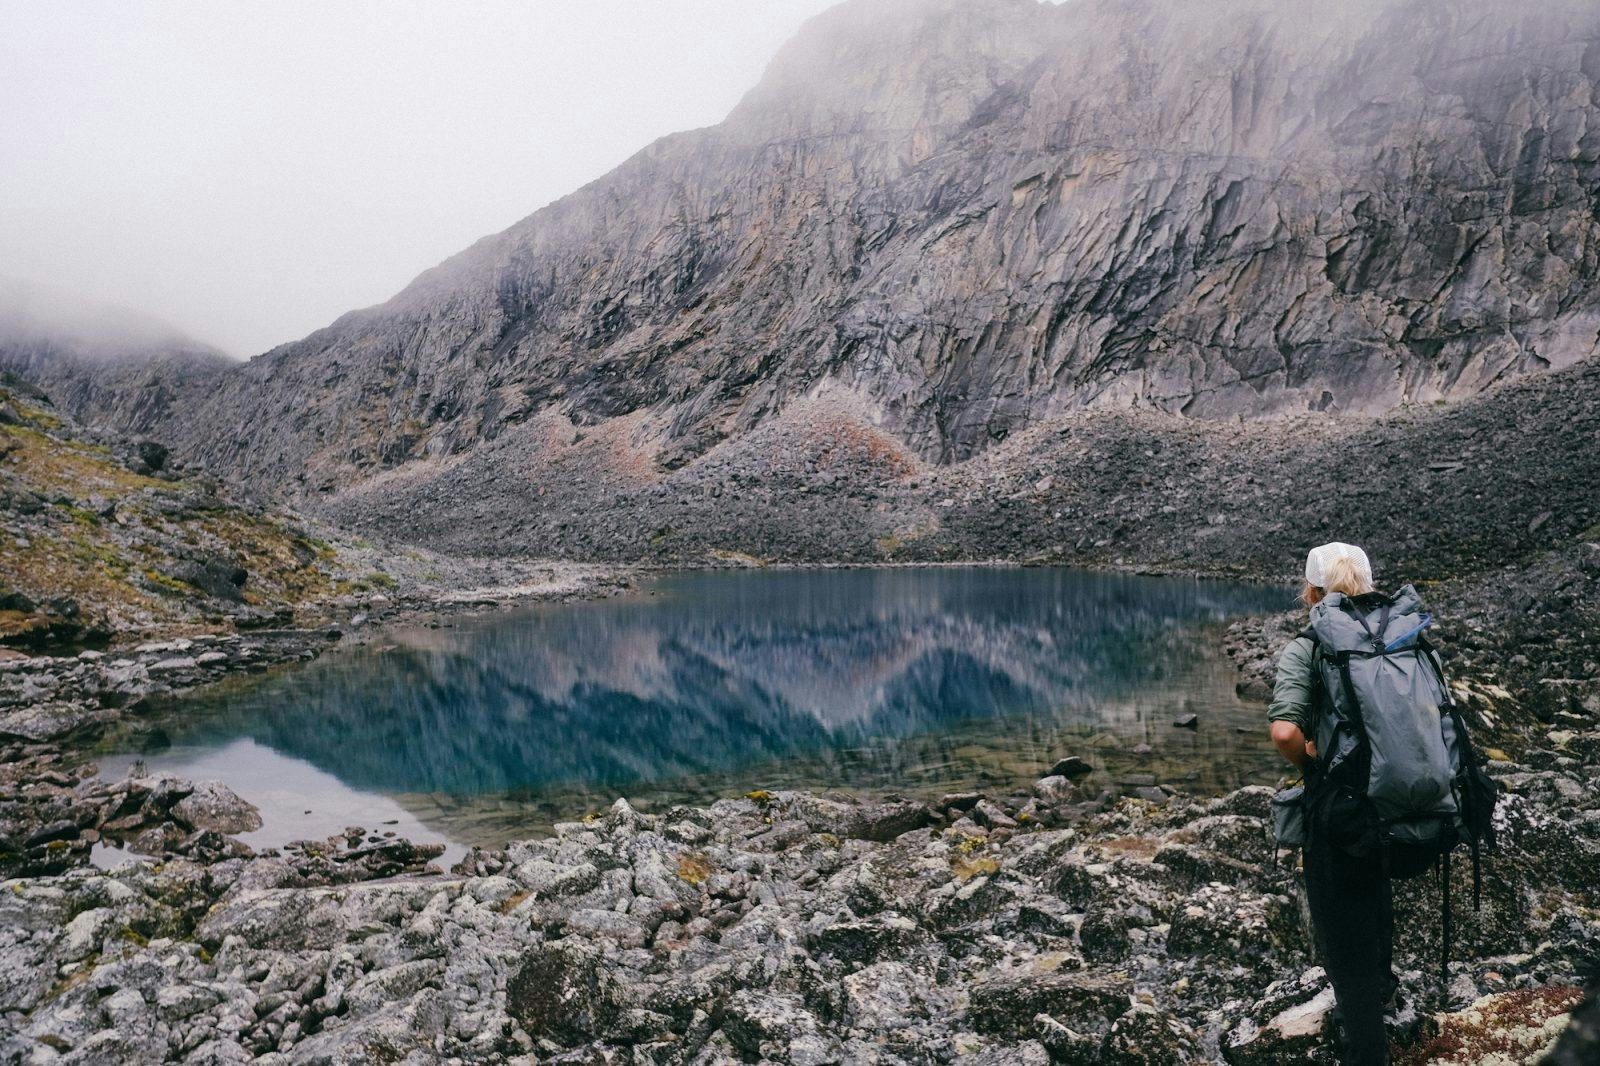 Emily Sullivan - The Cairn Project - Solo Alaska Adventure